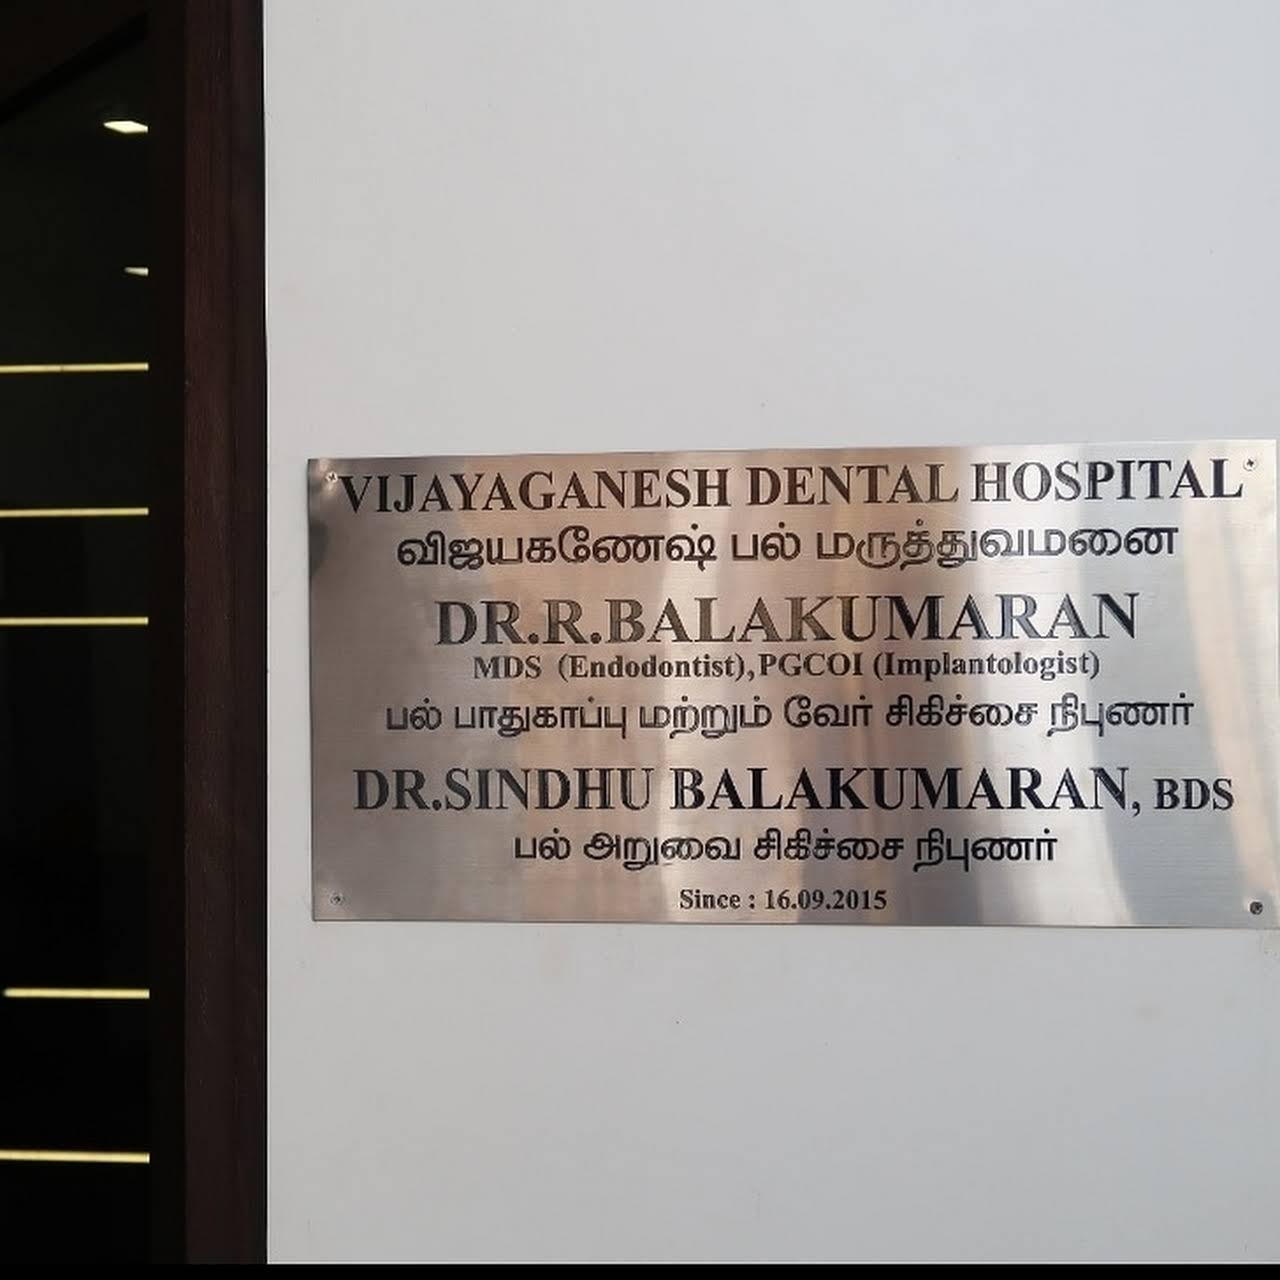 Vijayaganesh dental hospital|Clinics|Medical Services